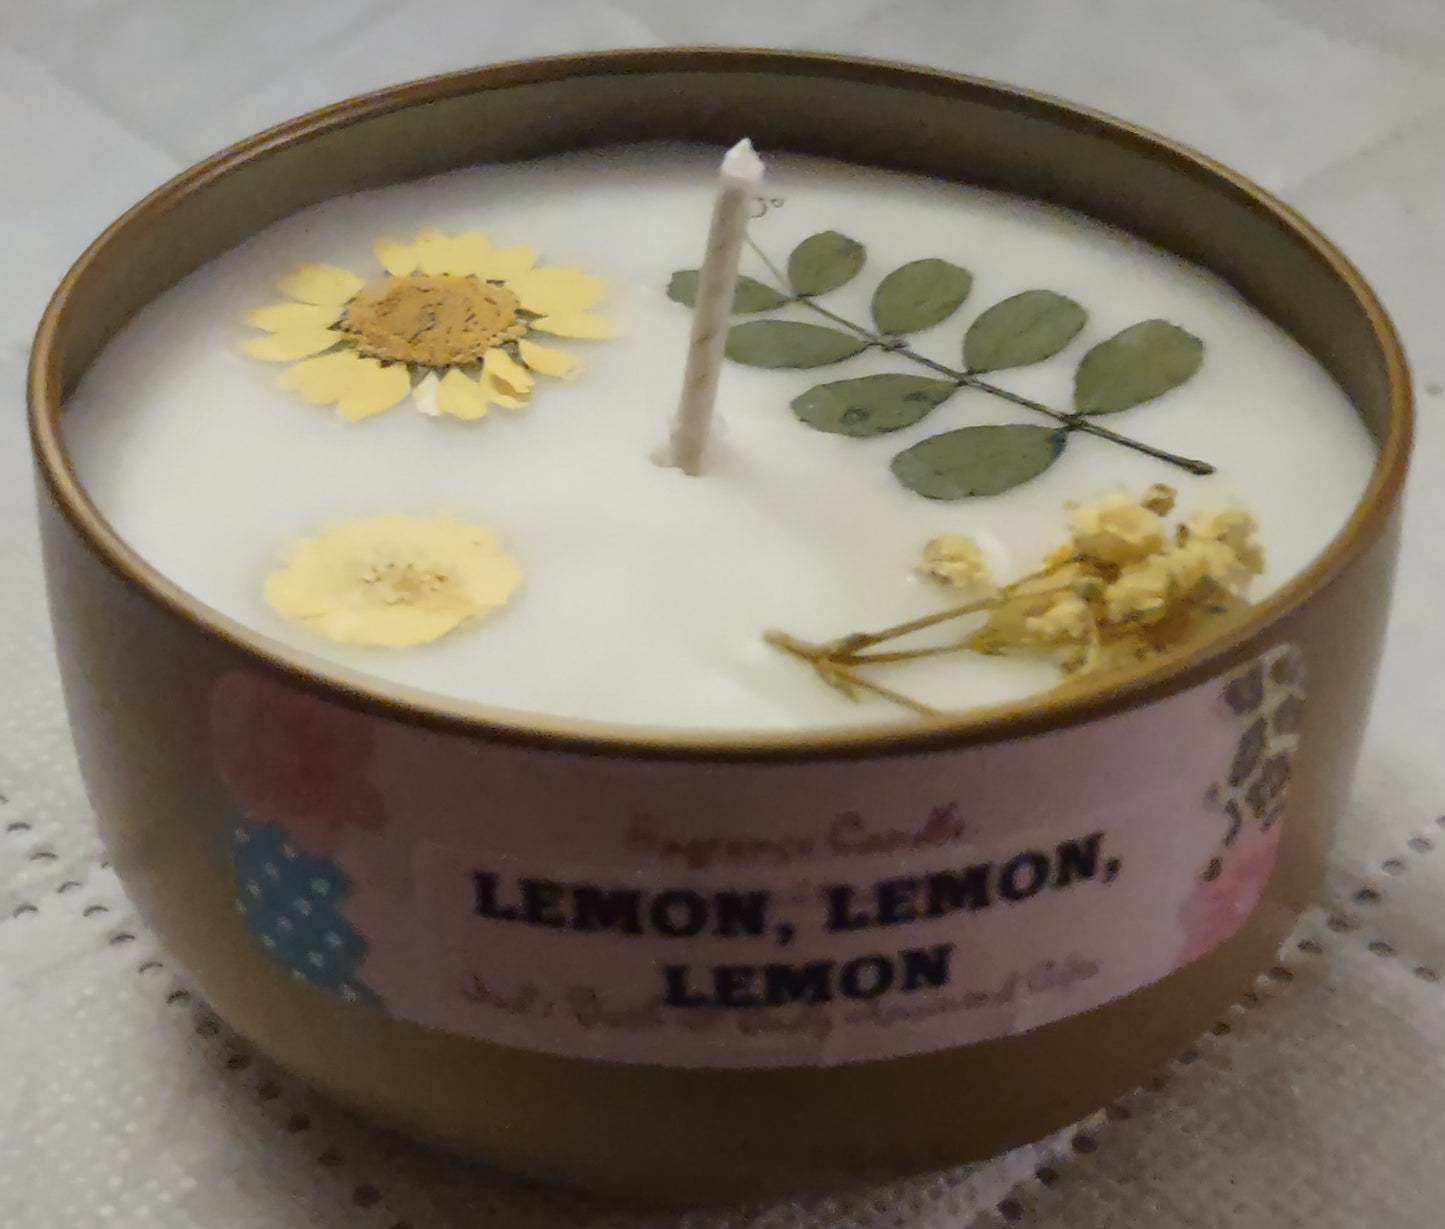 Lemon, Lemon, Lemon - 8oz metallic tin can with lid